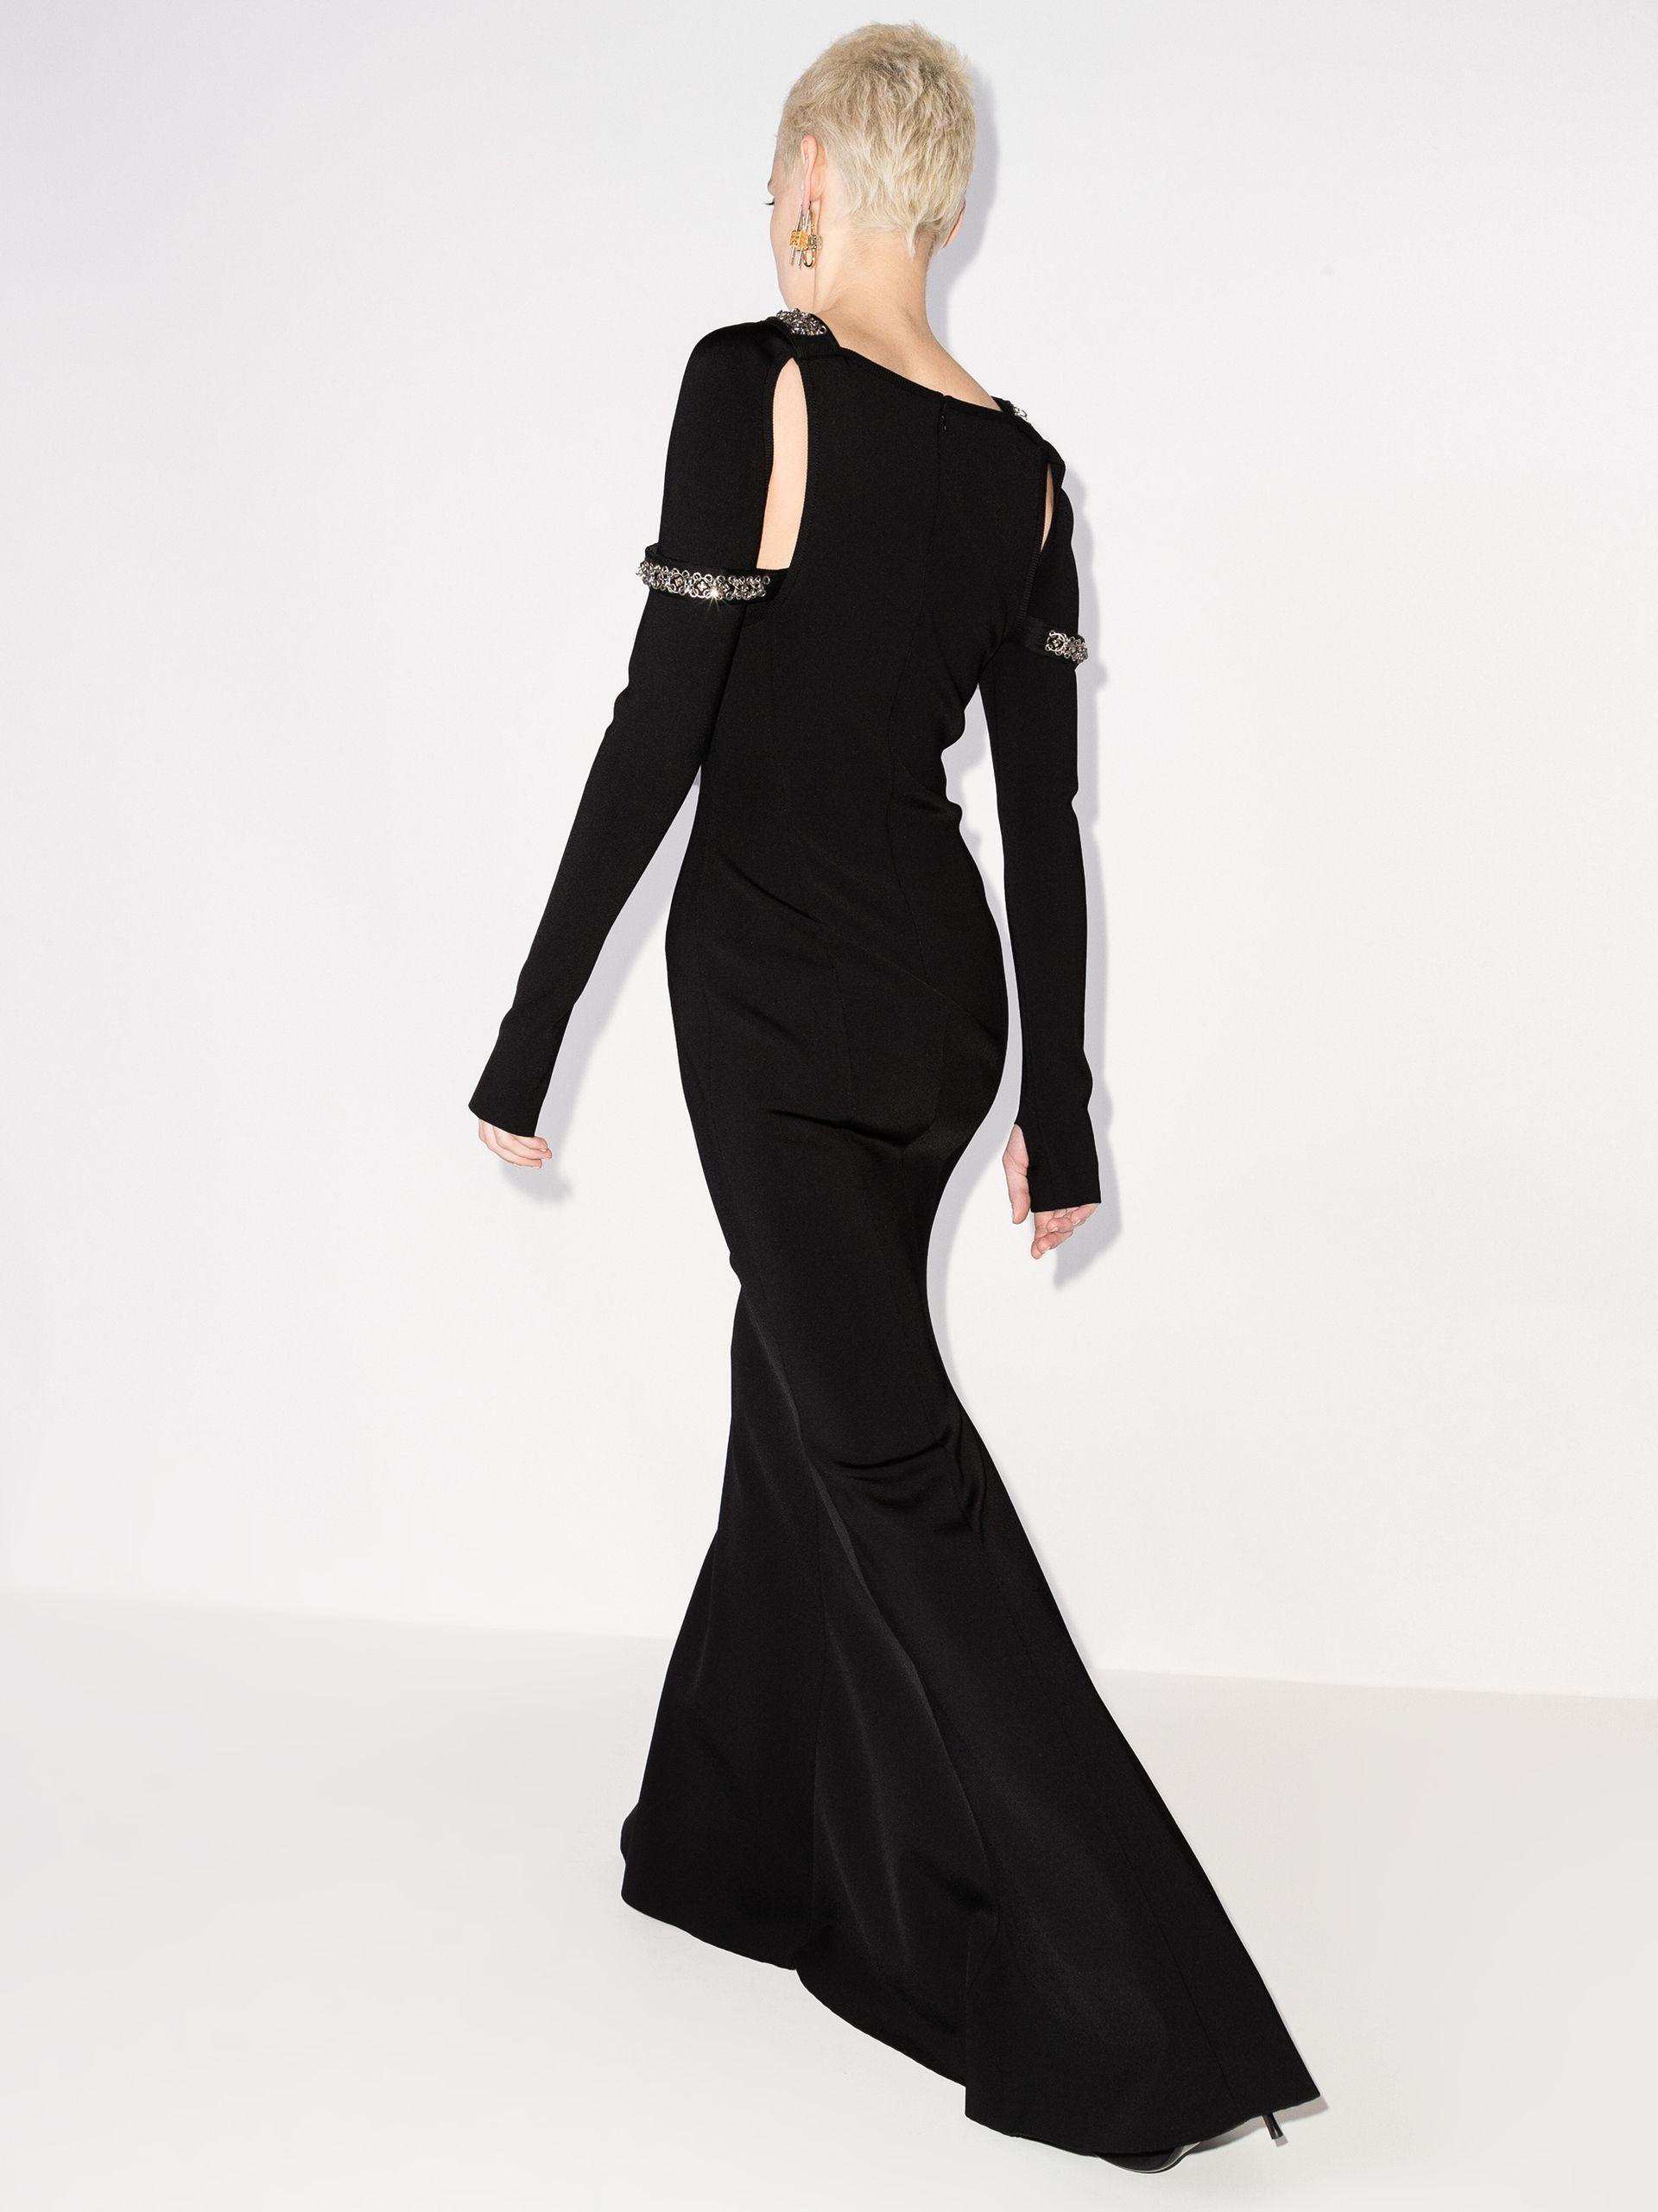 Givenchy Embellished Trumpet Cutout Evening Dress - Bergdorf Goodman